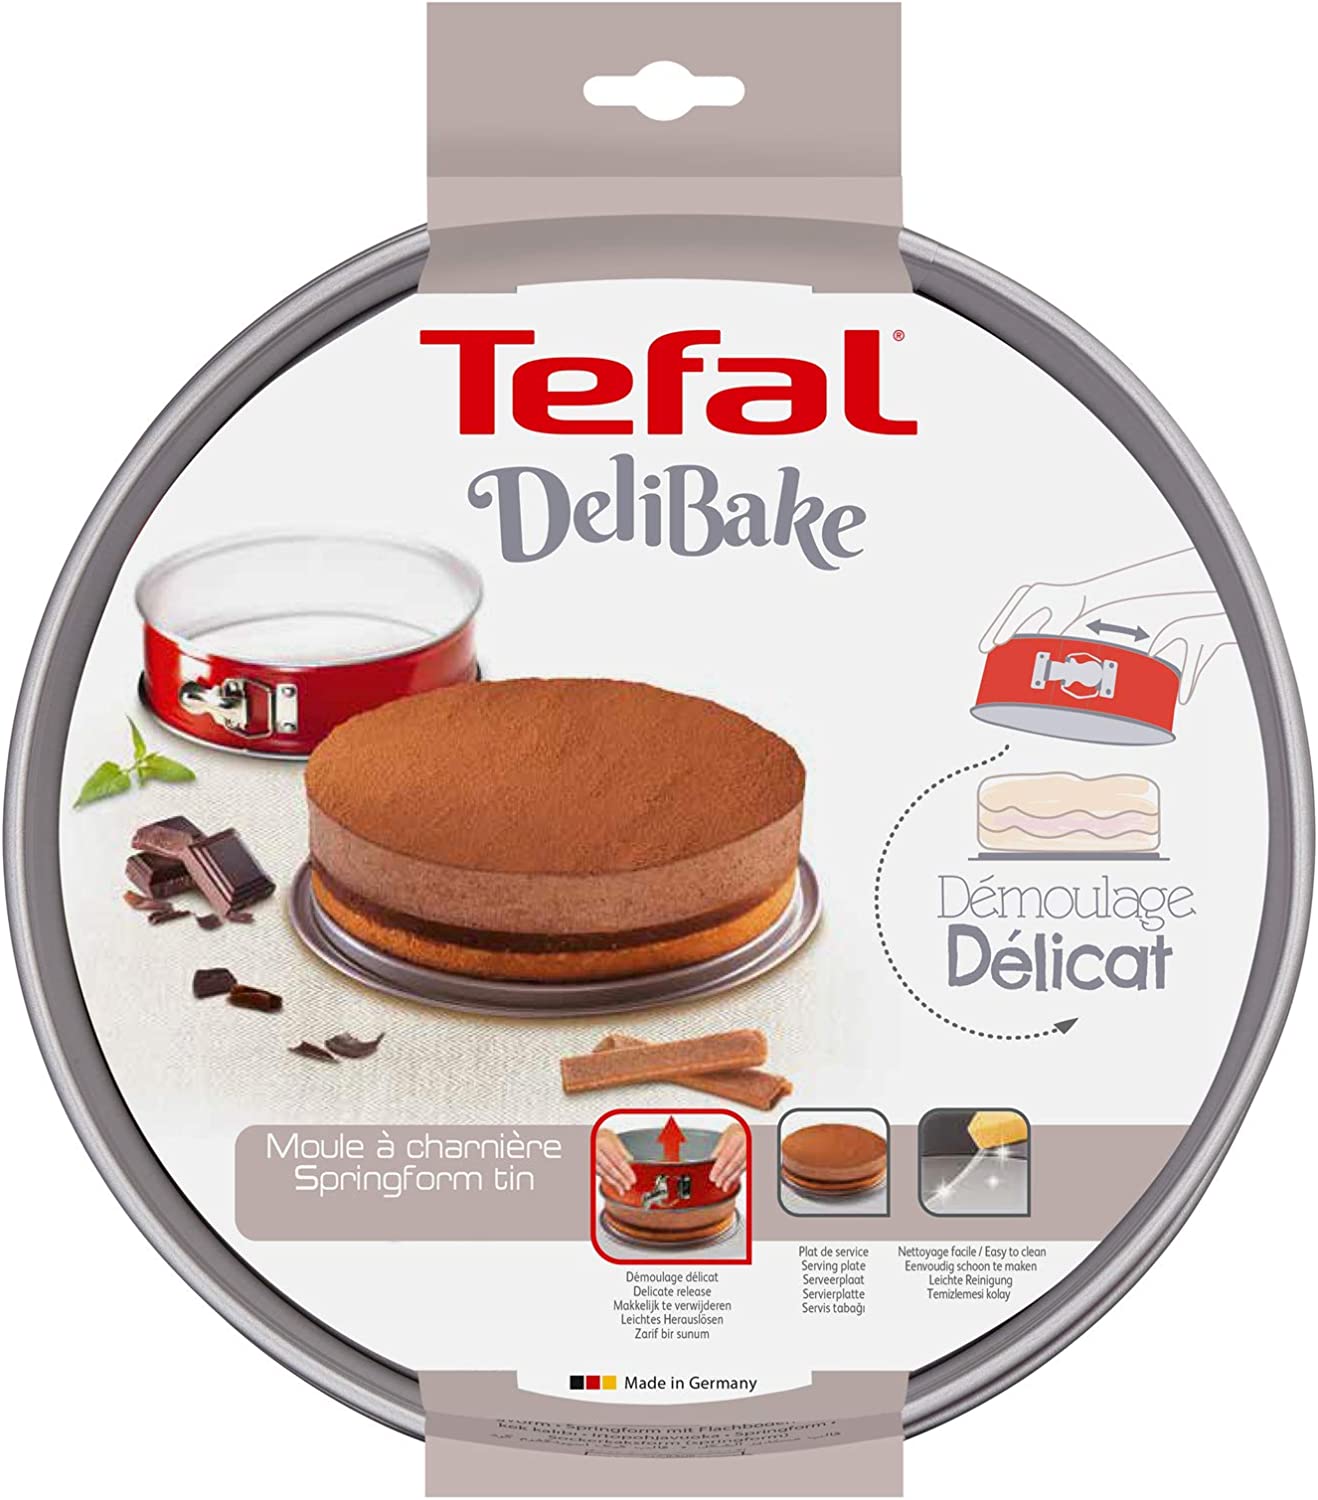 Tefal CRISPYBAKE Moule 6 mini cakes silicone 29X21cm J4172314